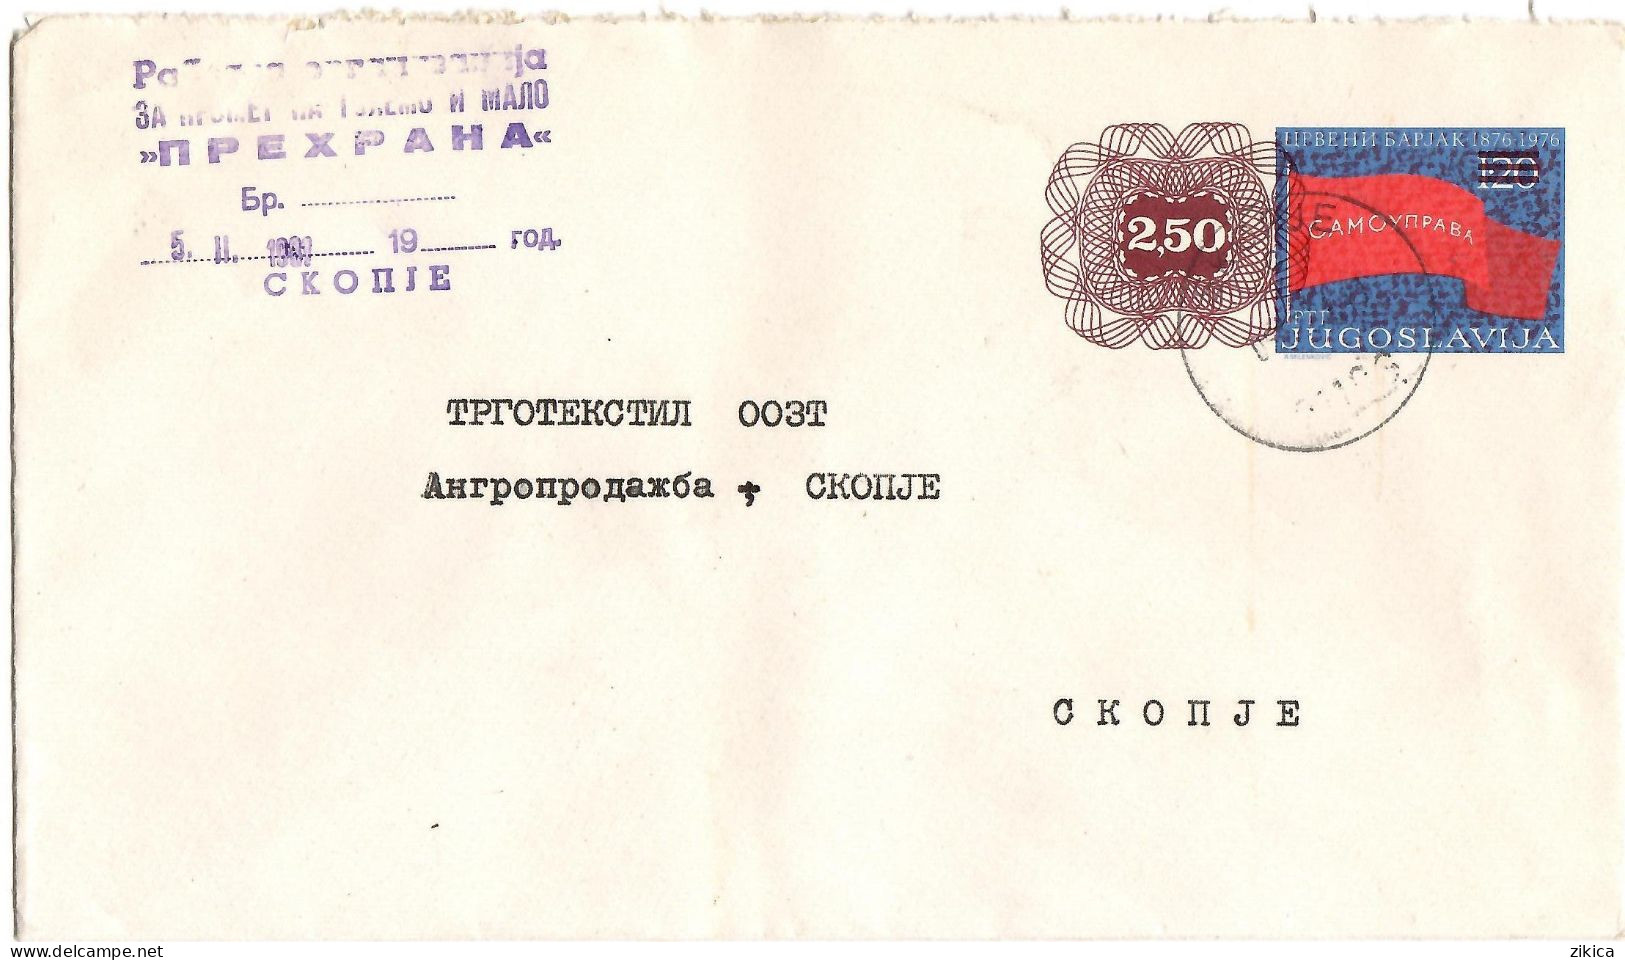 YUGOSLAVIA, 2.50 DINARA STATIONERY COVER OVERPRINT - Postal Stationery